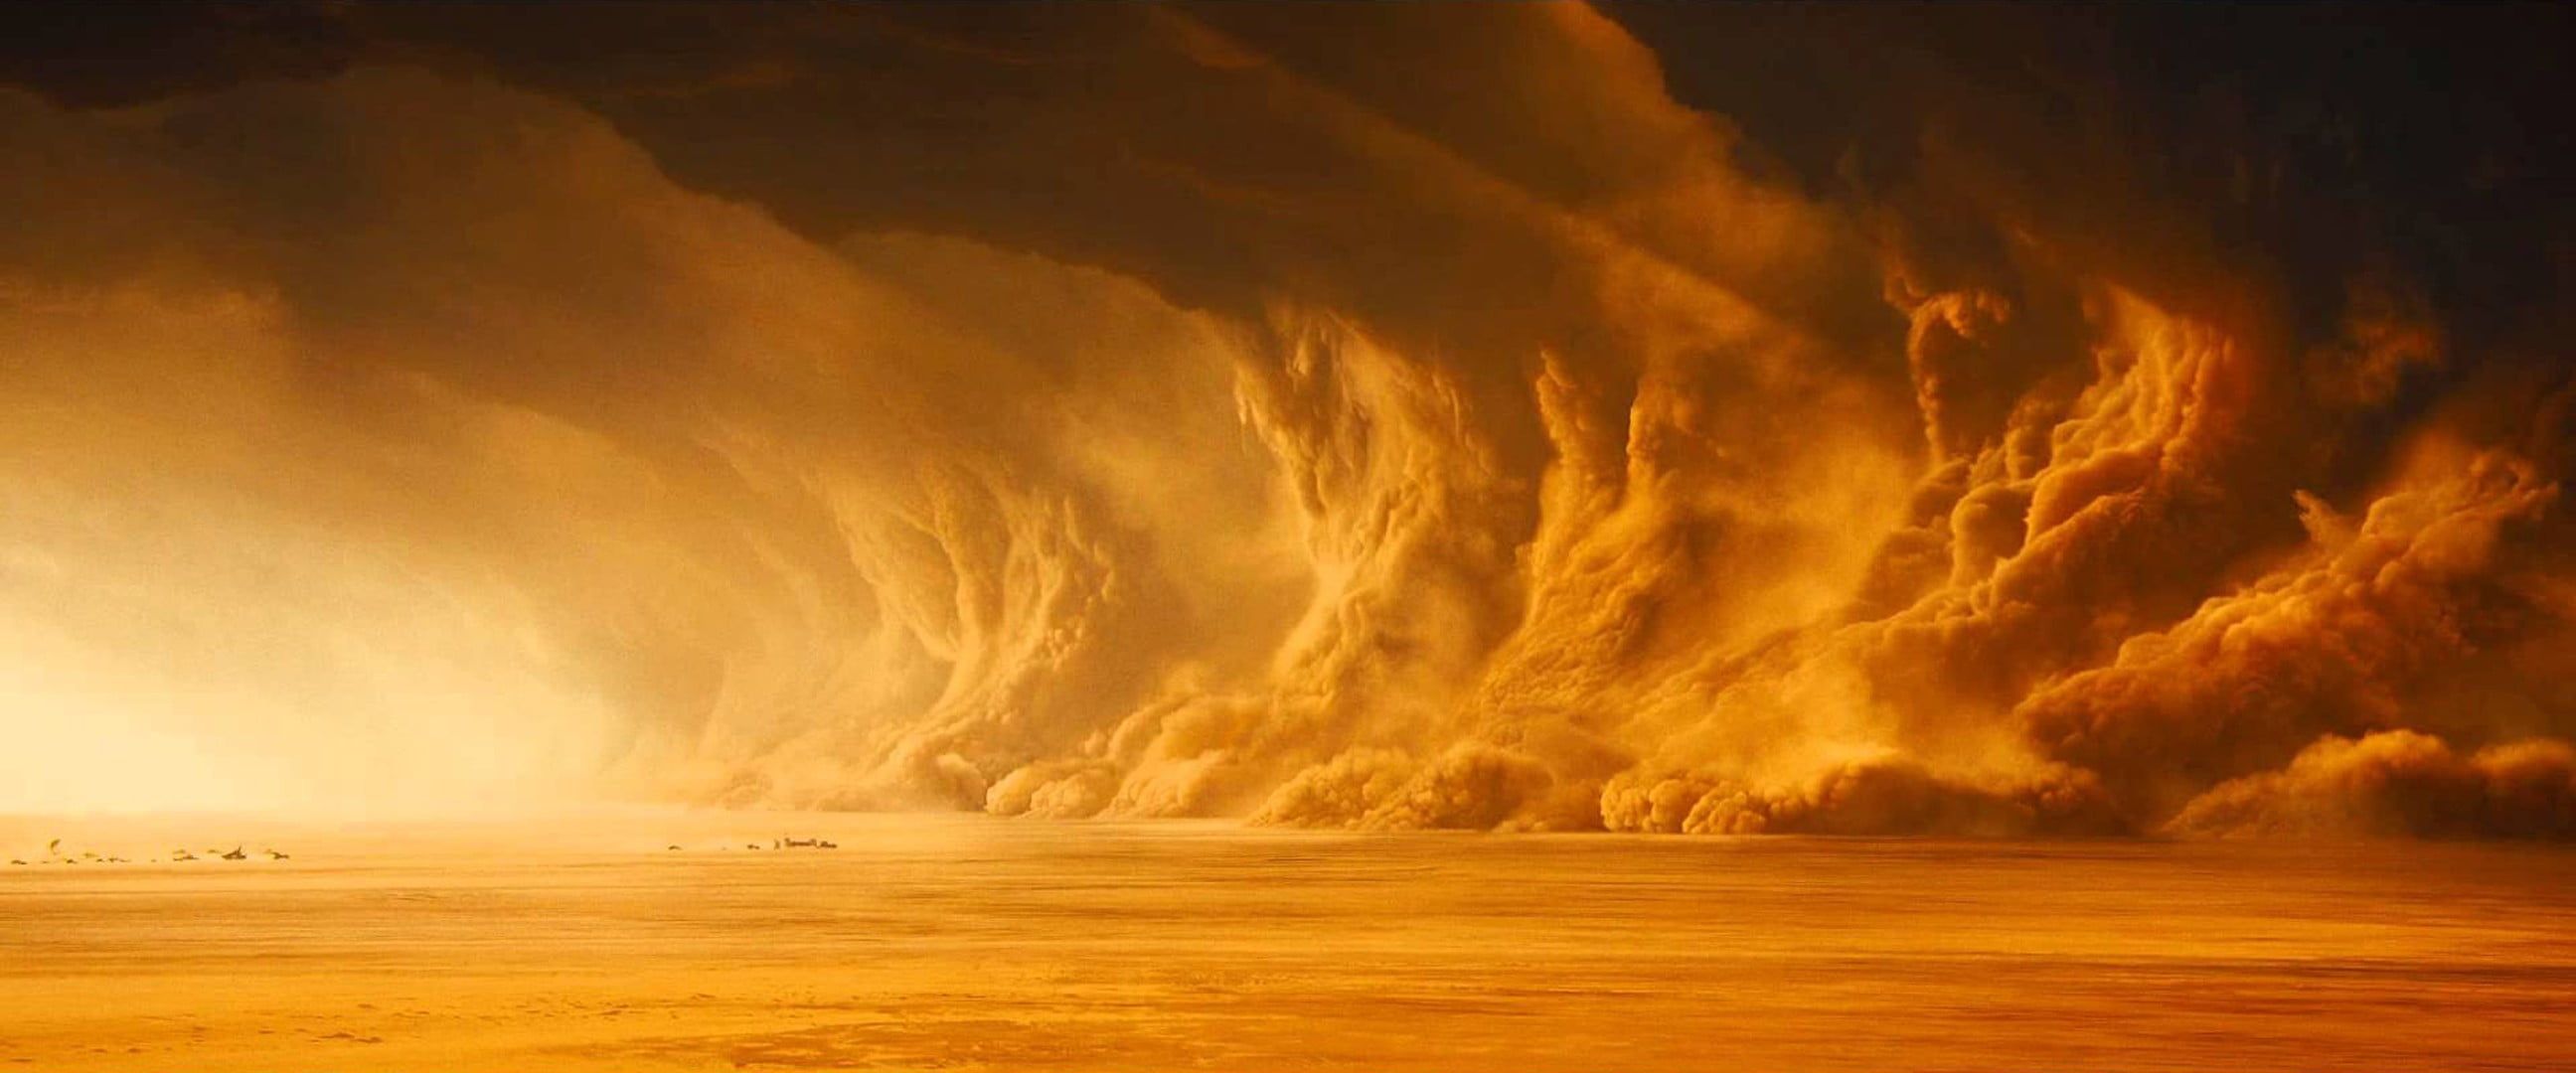 Sandstorm Digital Wallpaper Sandstorms Mad Max Fury Road